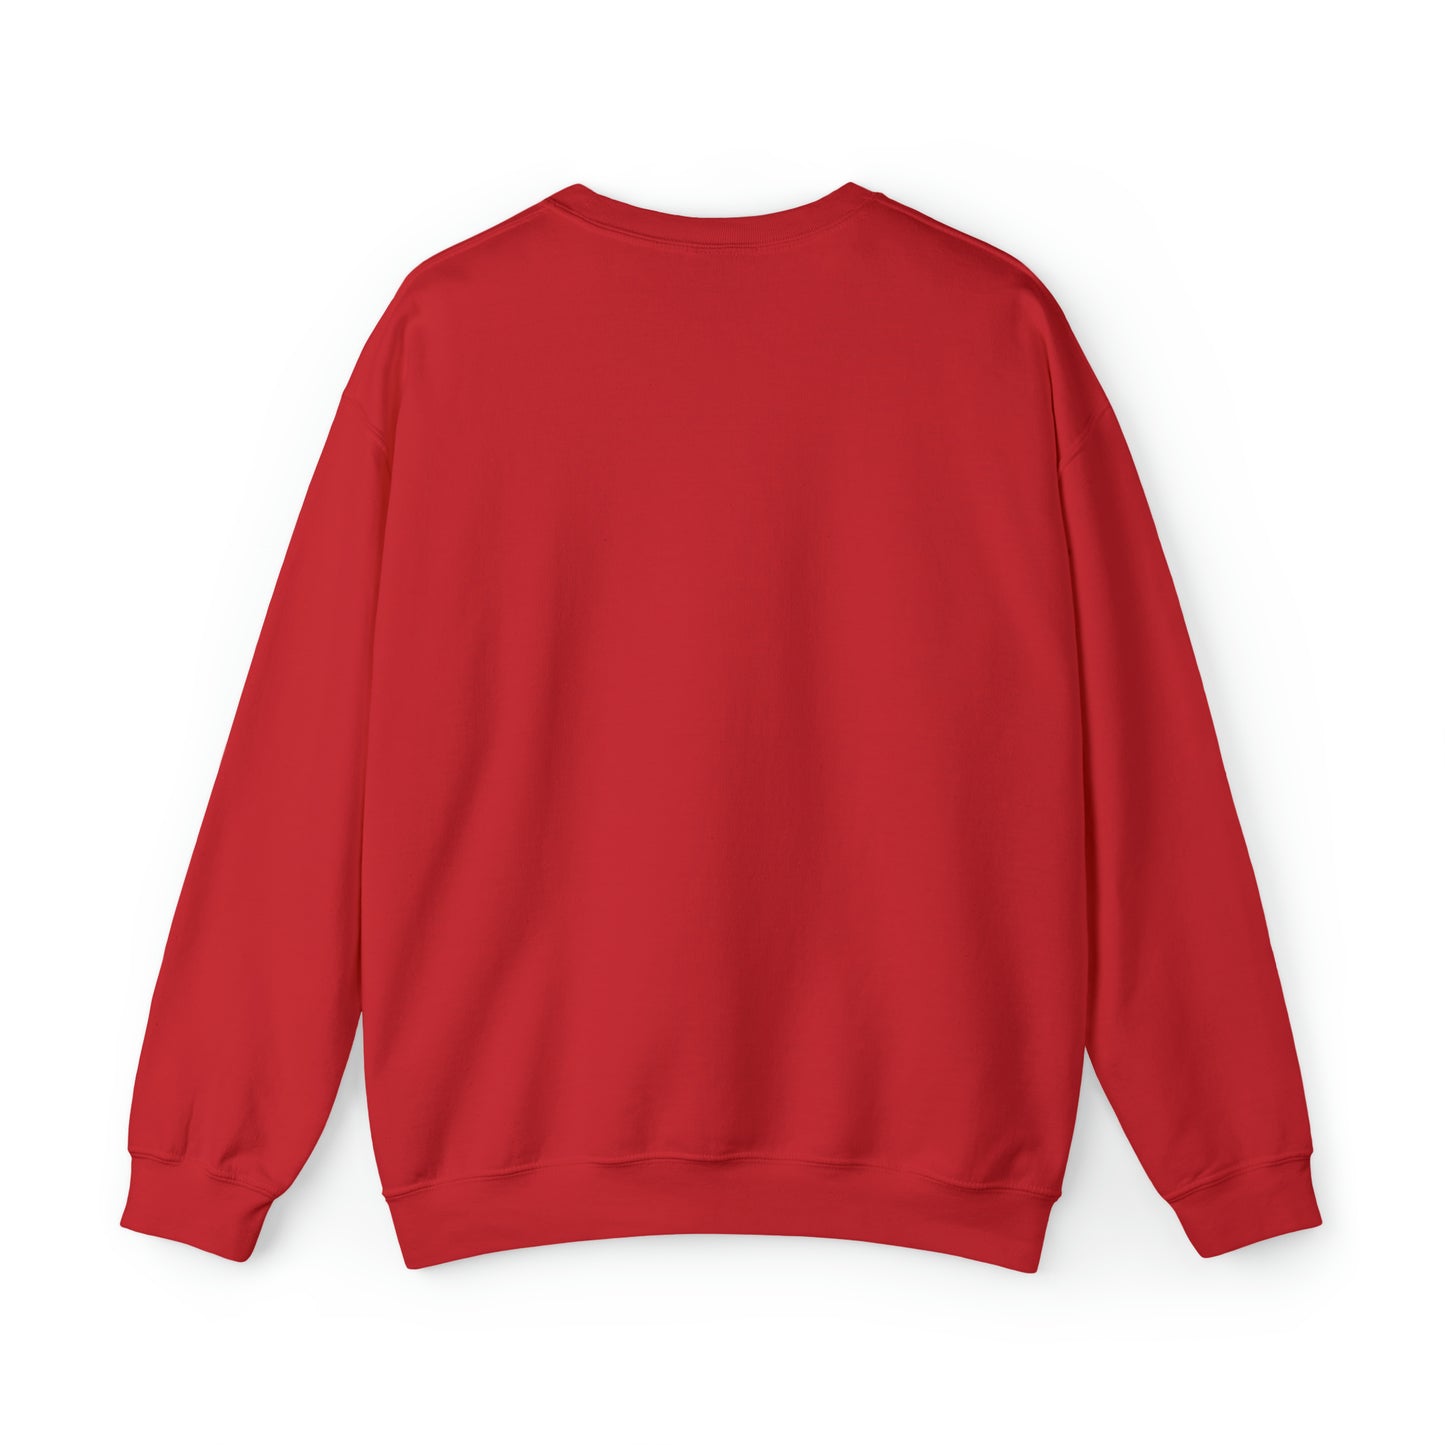 Babe Unisex Heavy Blend™ Crewneck Sweatshirt